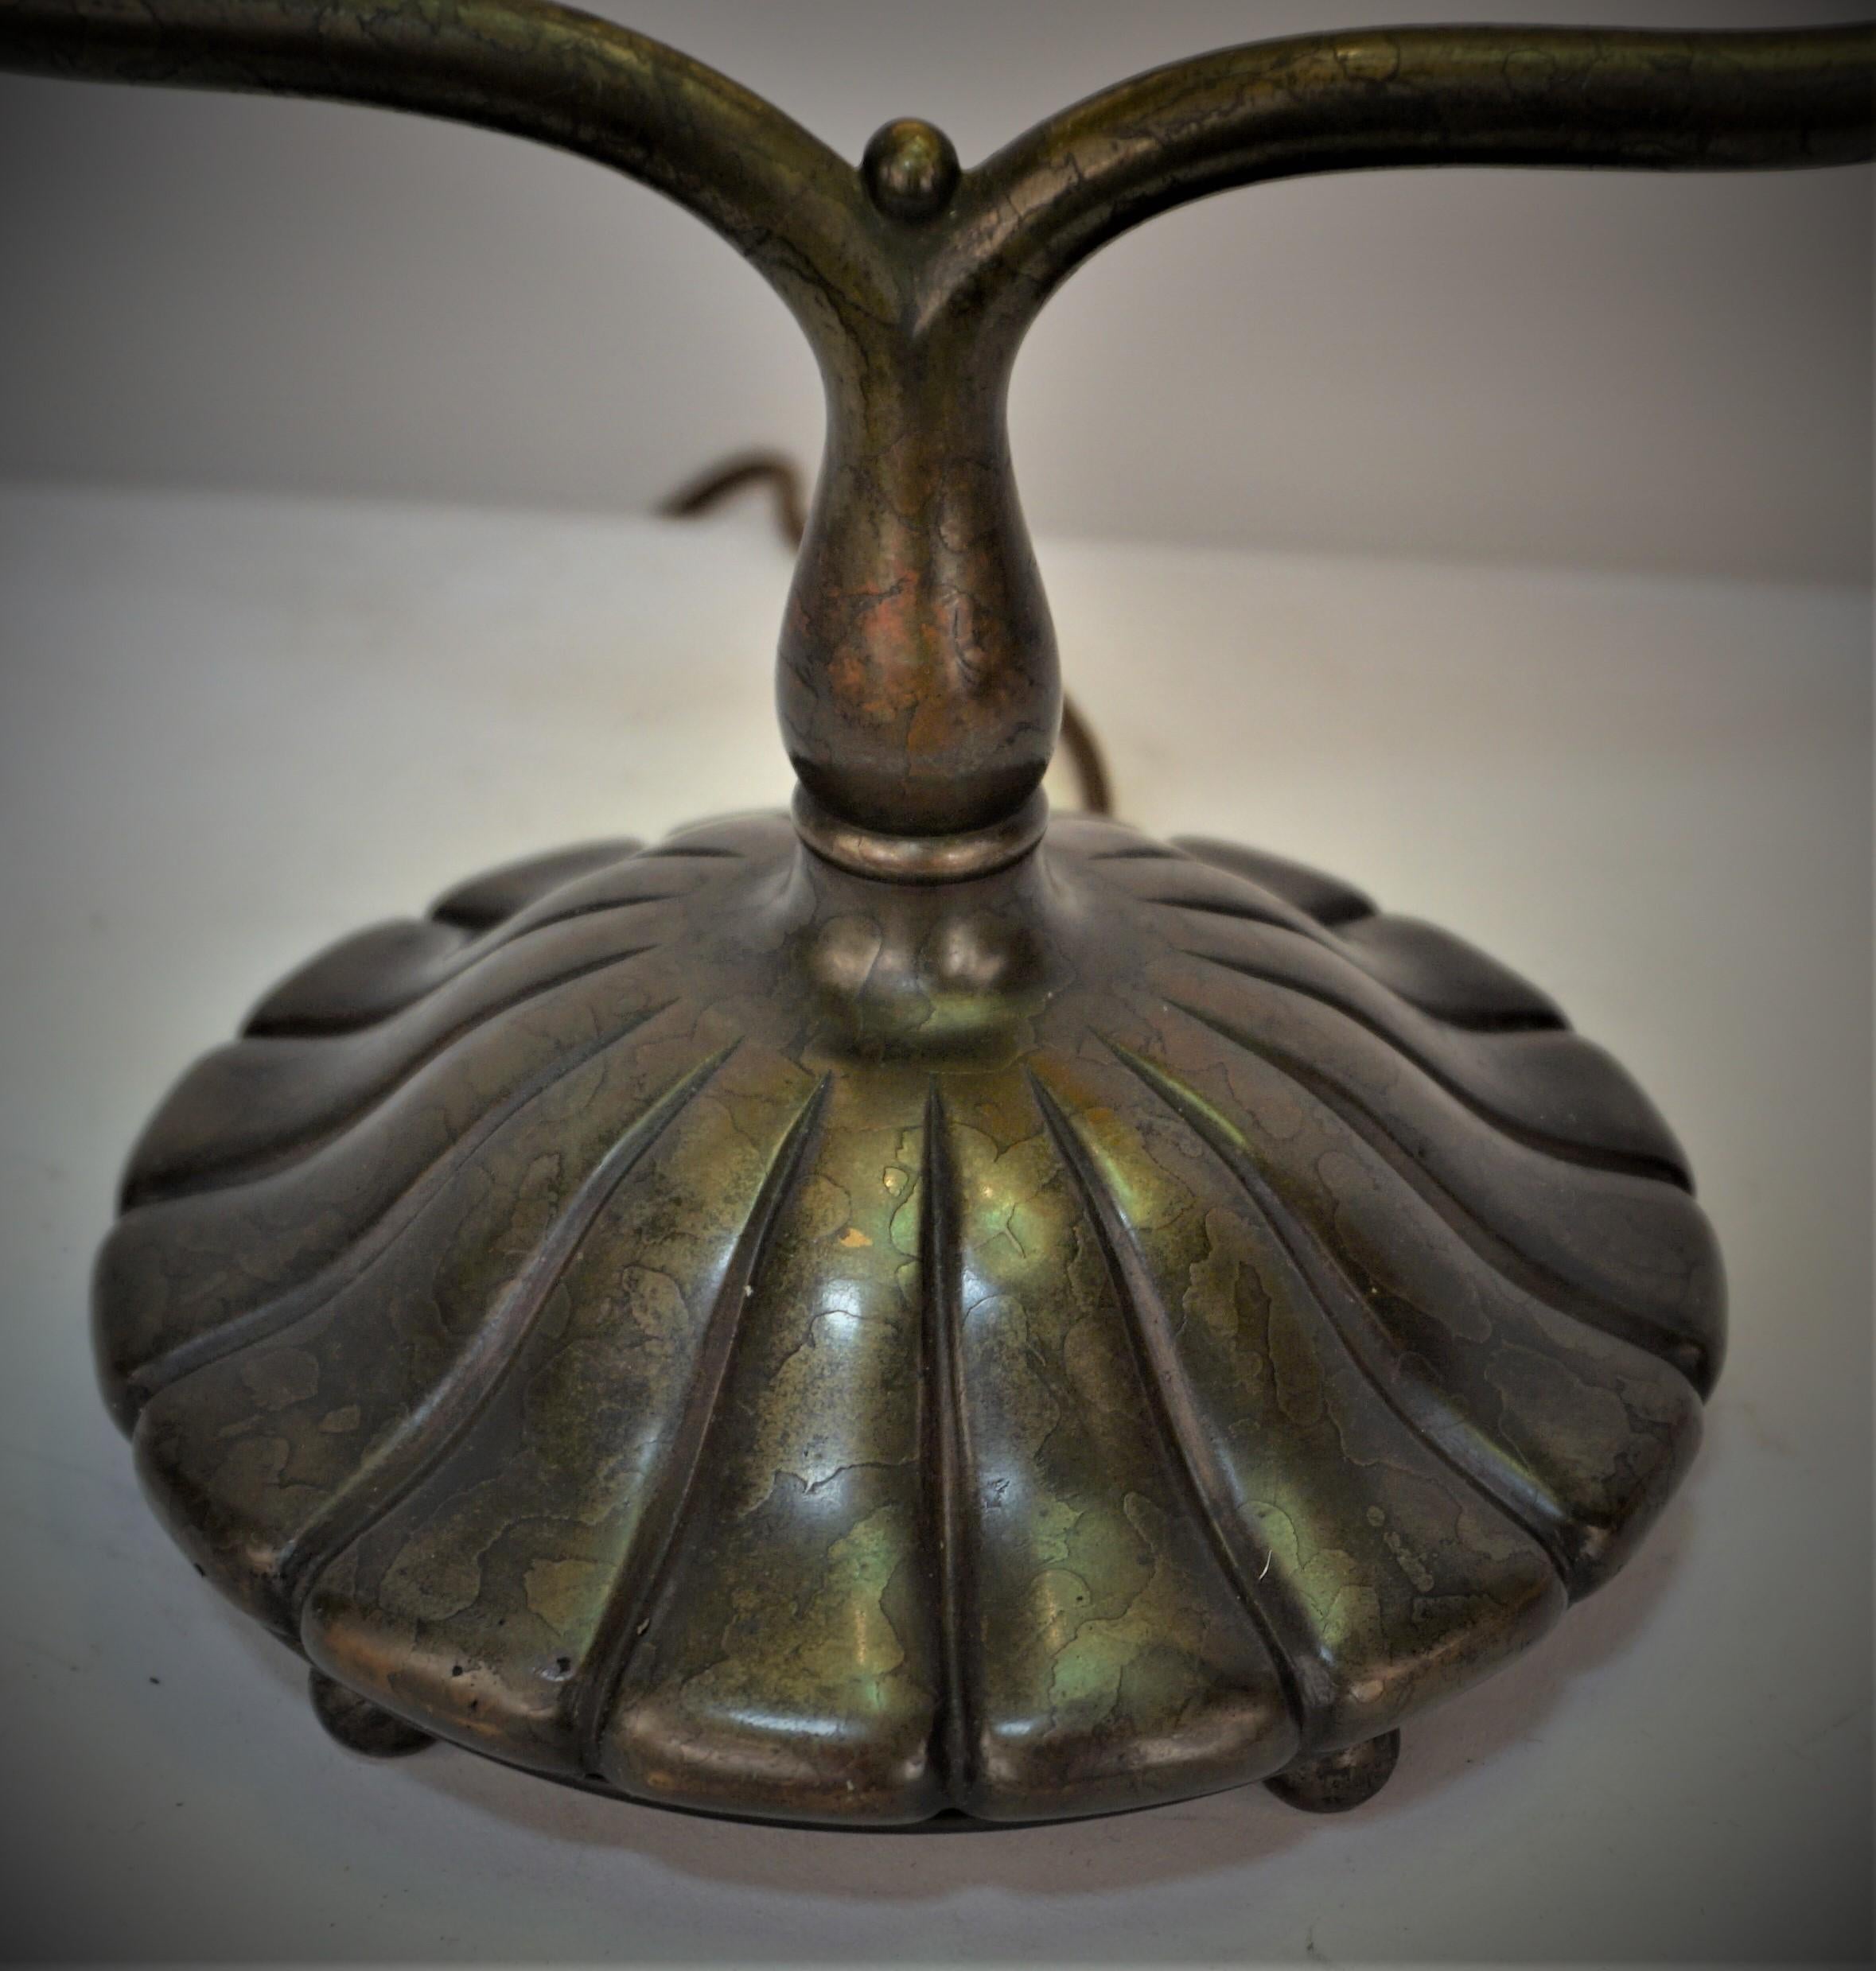  Lampe de bureau/de table en bronze de Tiffany Studios en forme de harpe avec un magnifique abat-jour en or irisé.
Marqué Tiffany Studios New York
